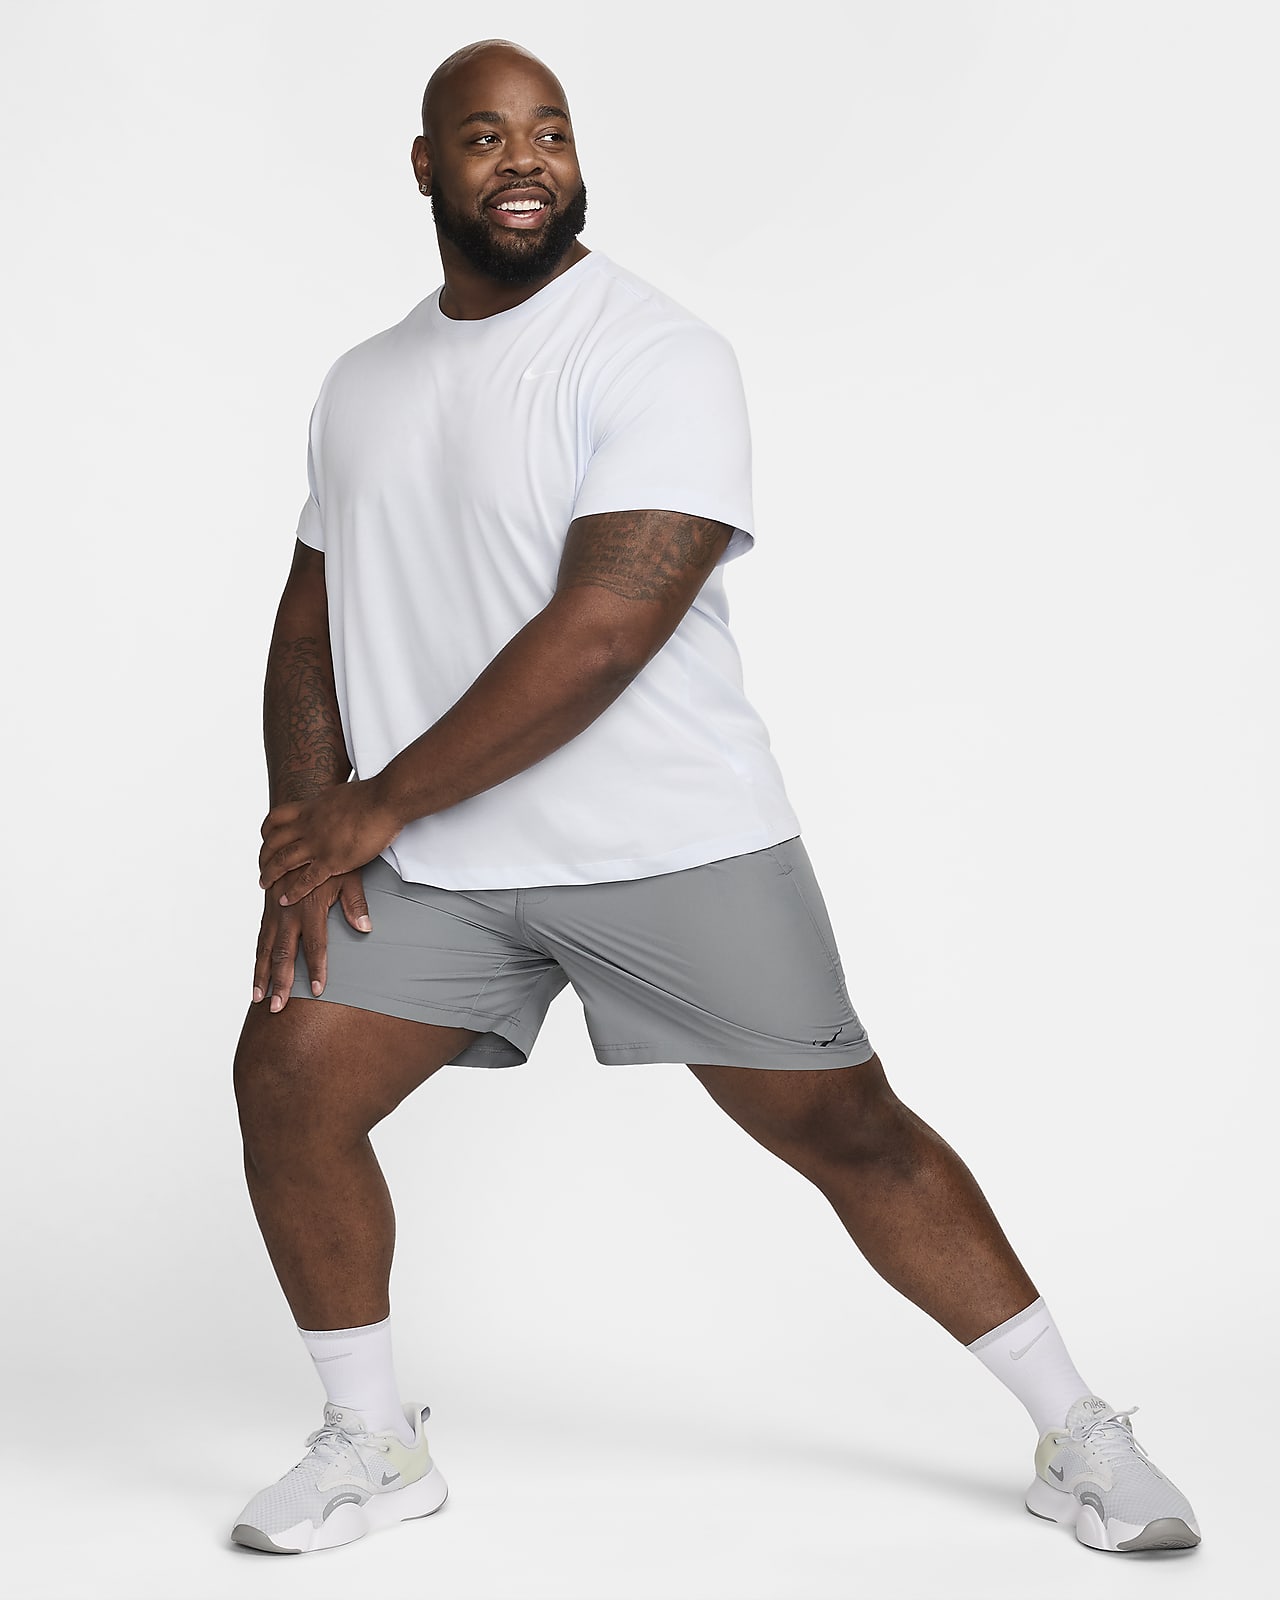  Men's Athletic Shirts & Tees - Nike / Sleeveless / Men's  Athletic Shirts & Tees : Clothing, Shoes & Jewelry